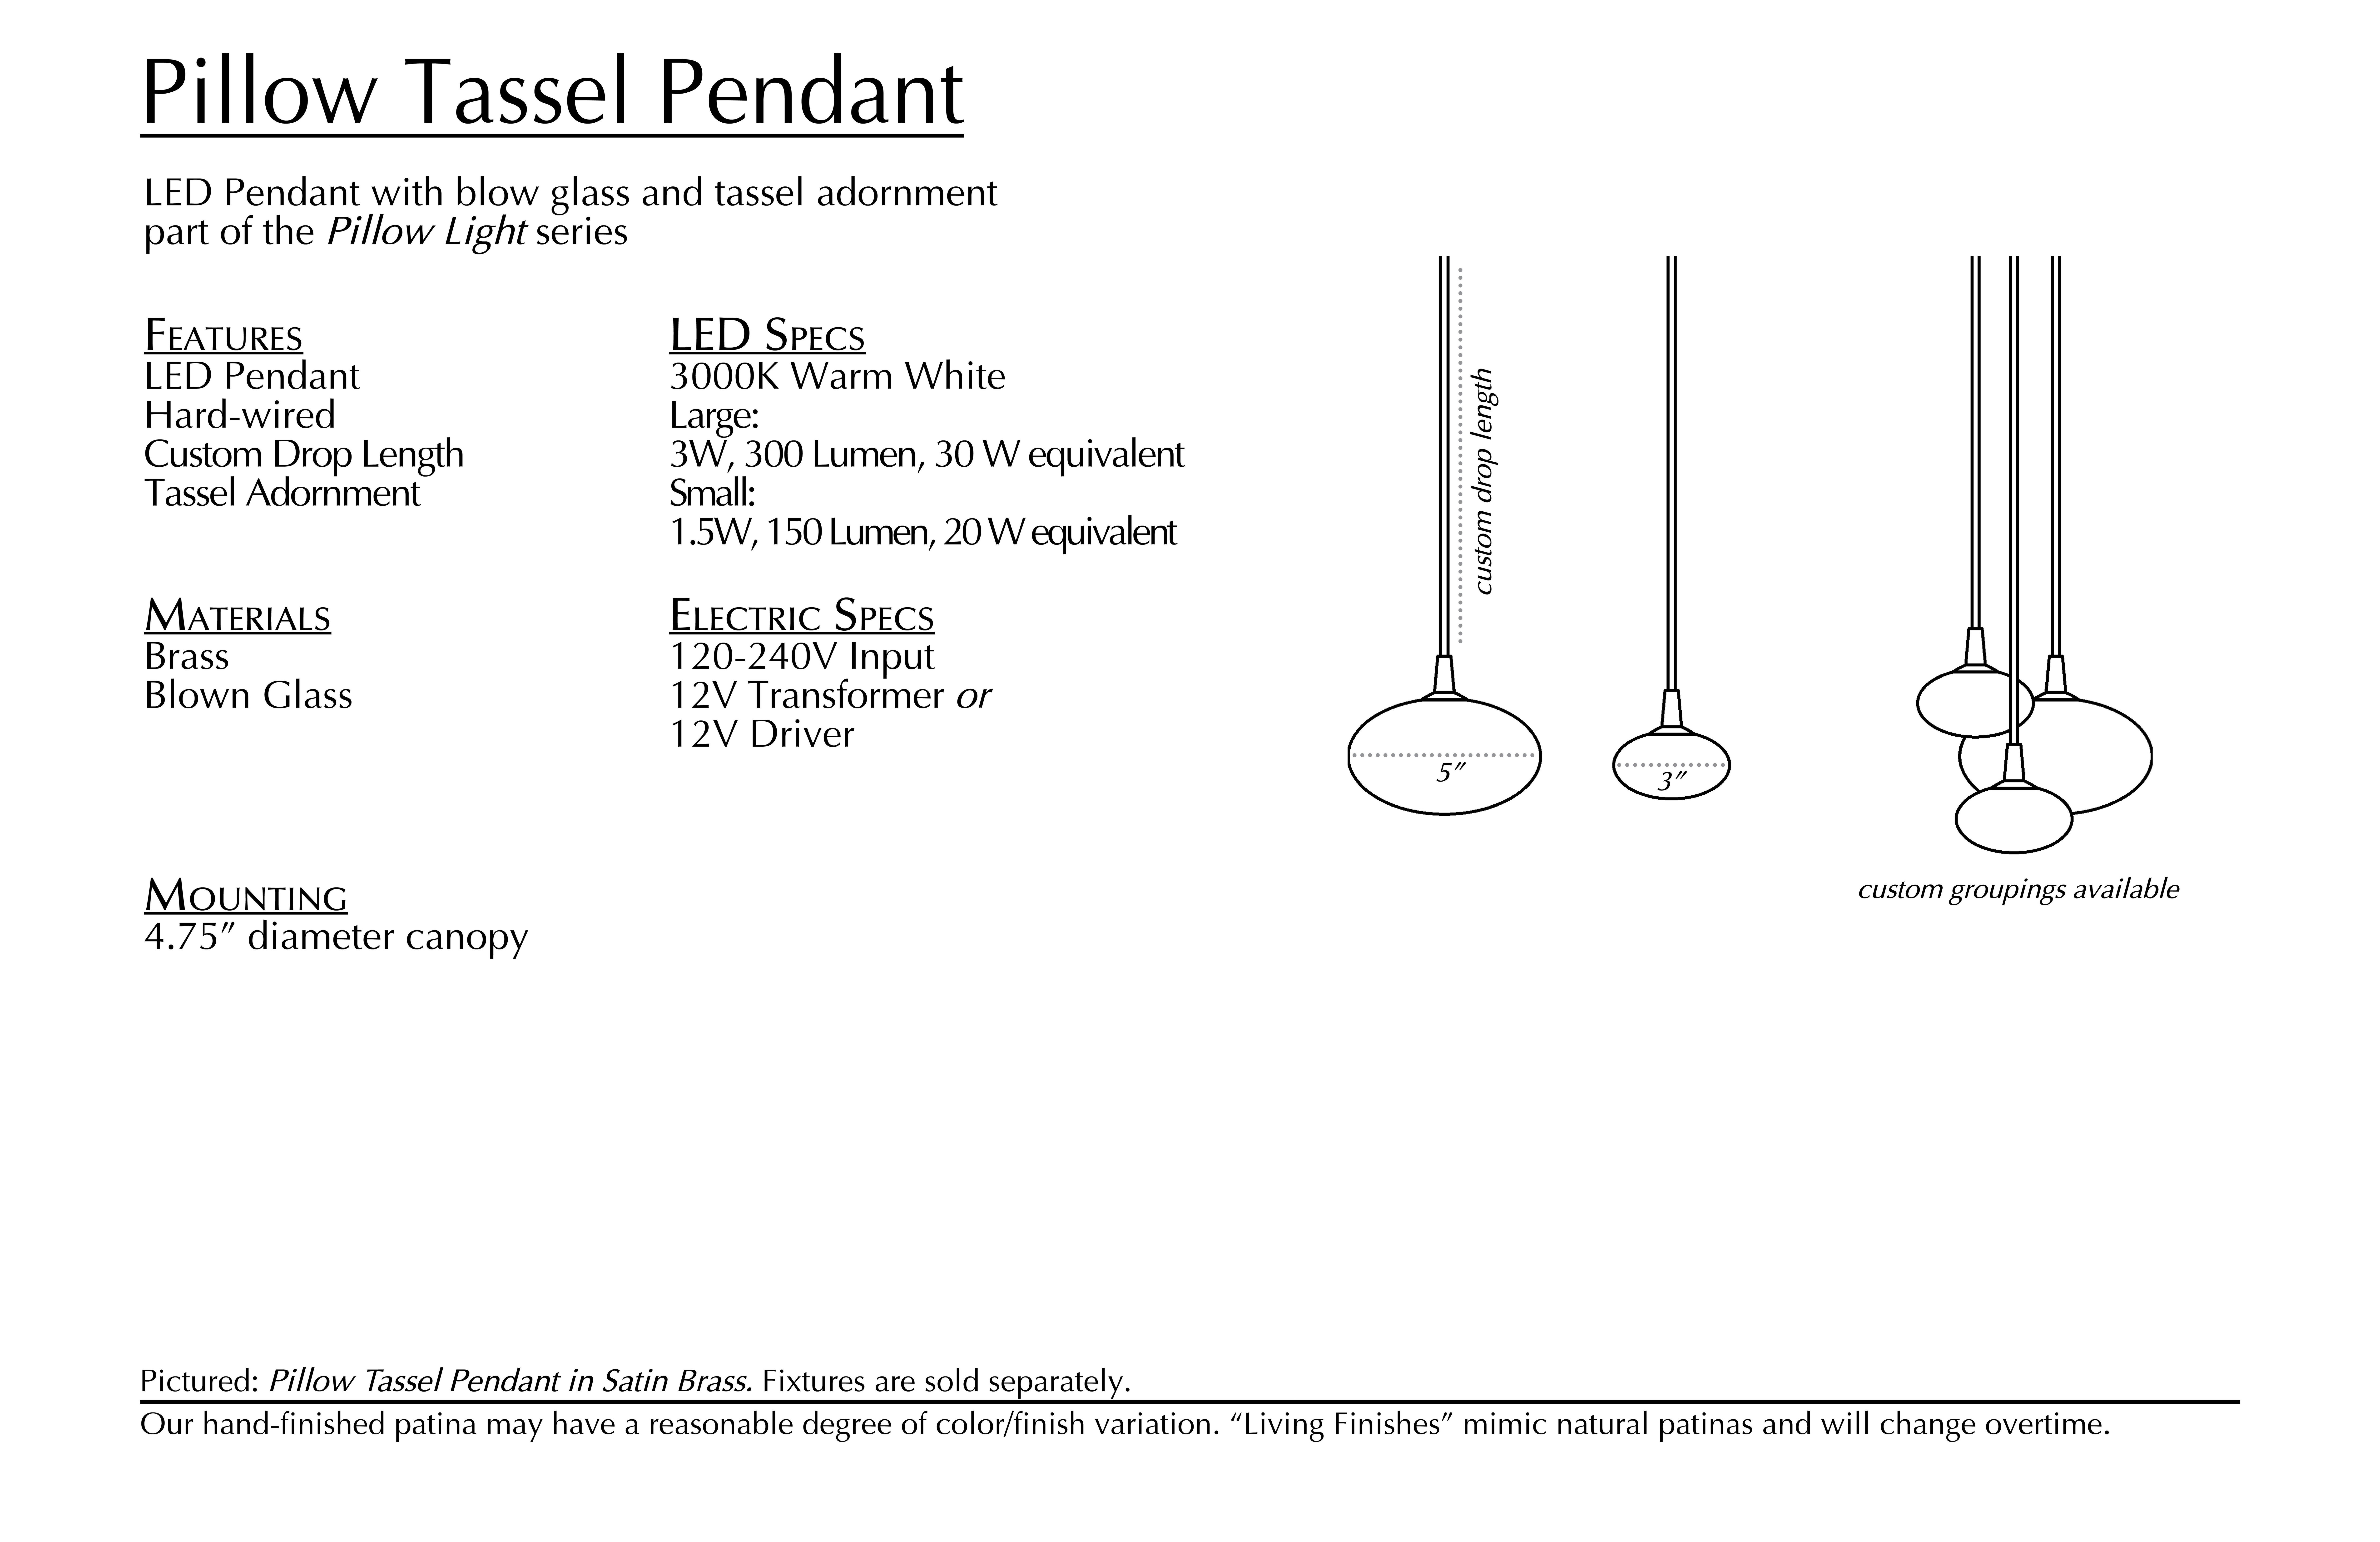 Patinated Pillow Tassel Pendant LED Glass Pendant w/ Thin Brass Stem and Tassel 'baby'